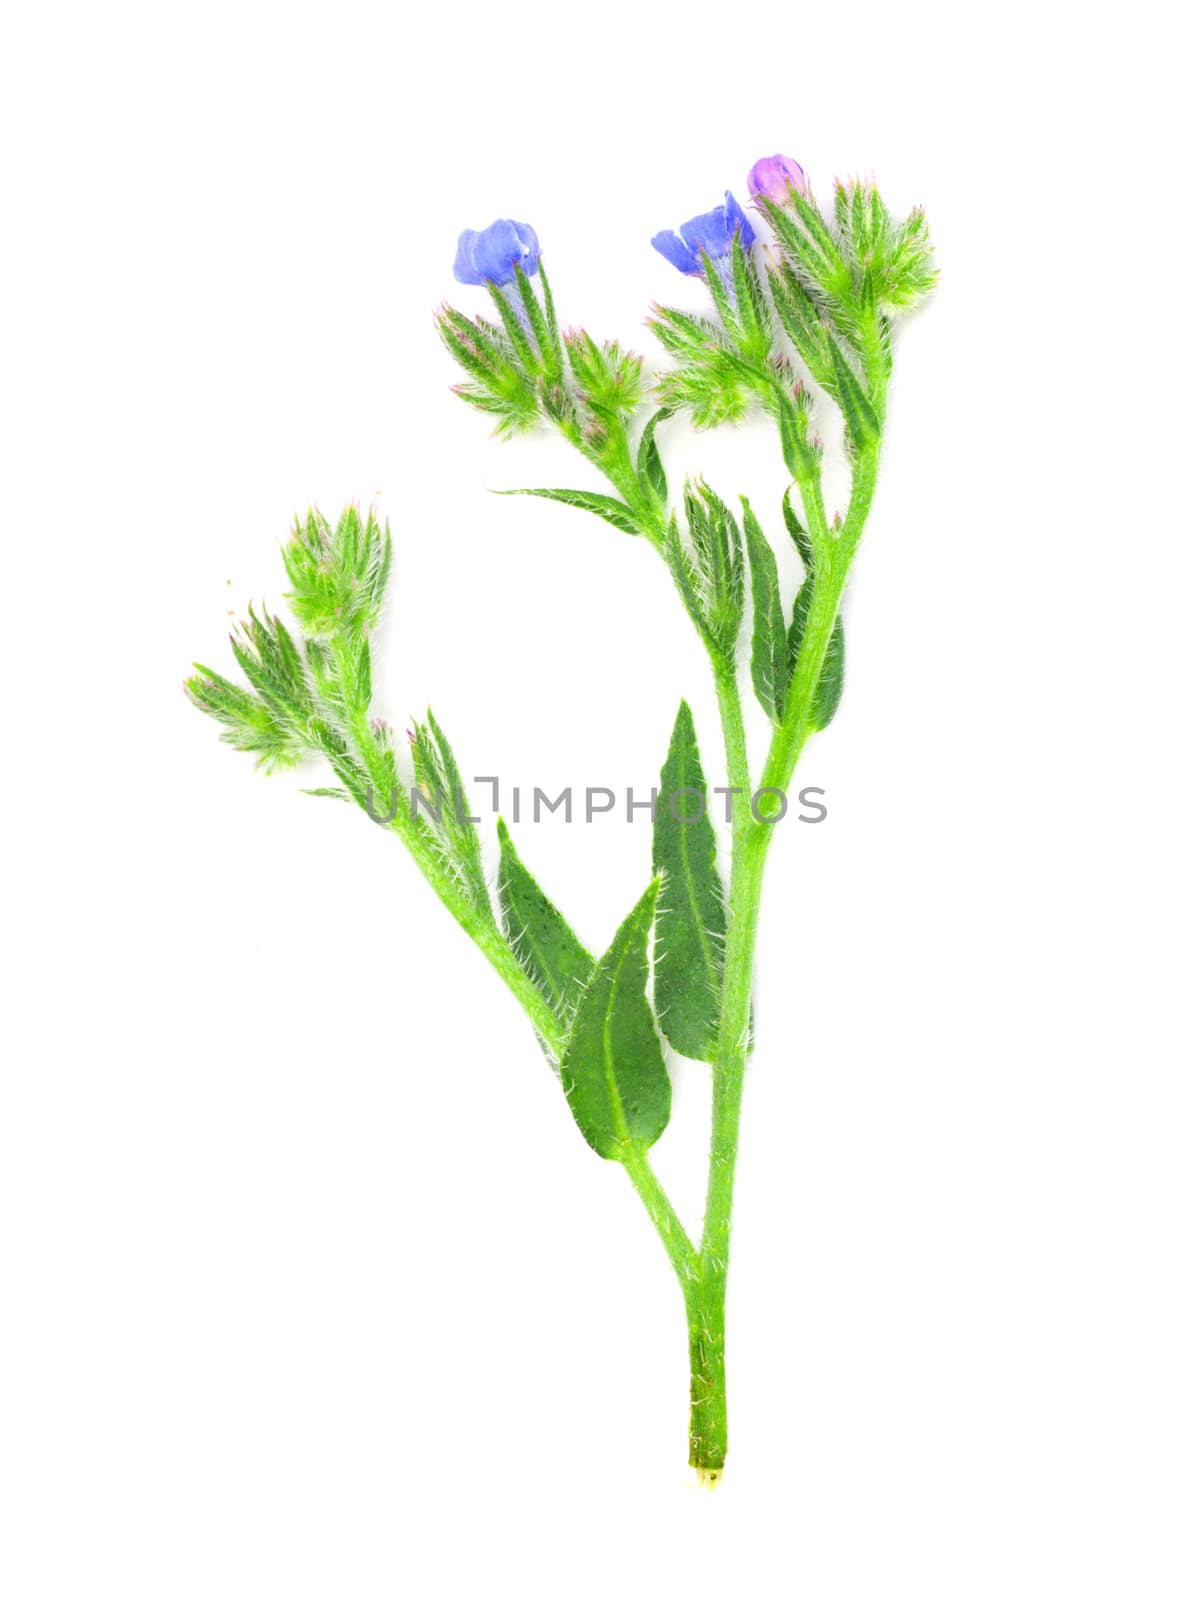 knapweed flower on a white background by schankz